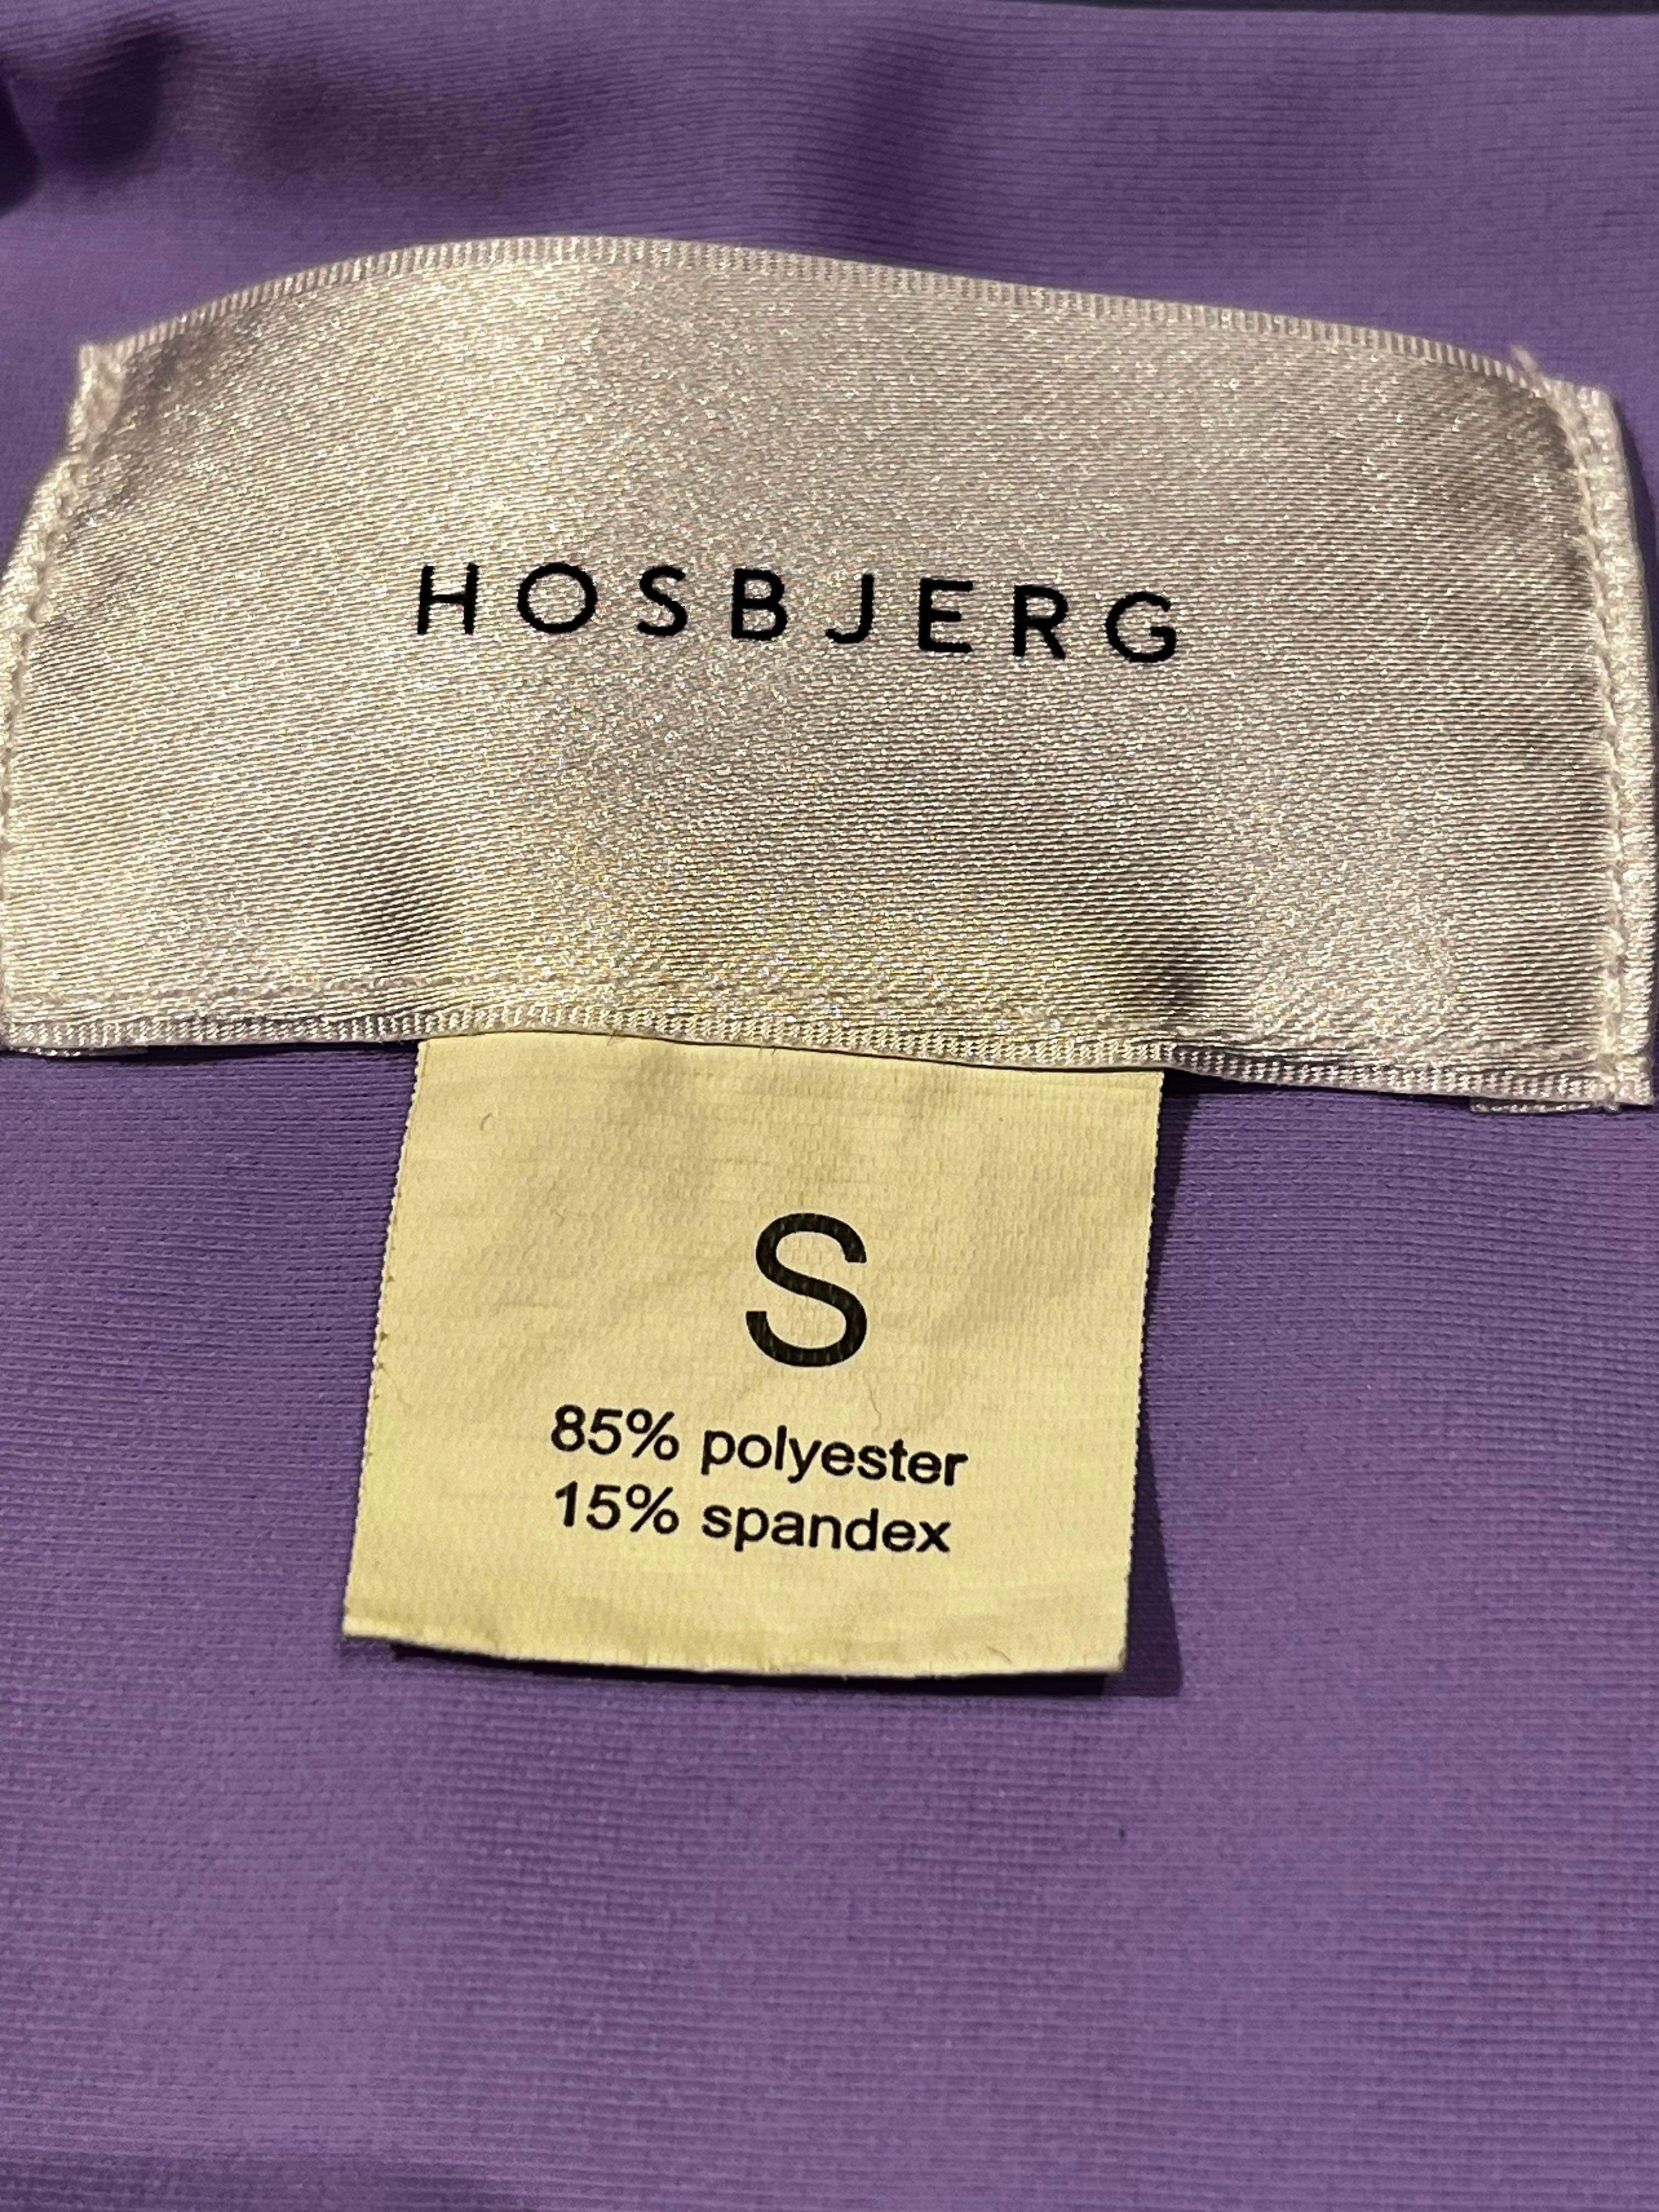 Hosbjerg - Bikini - Size: S